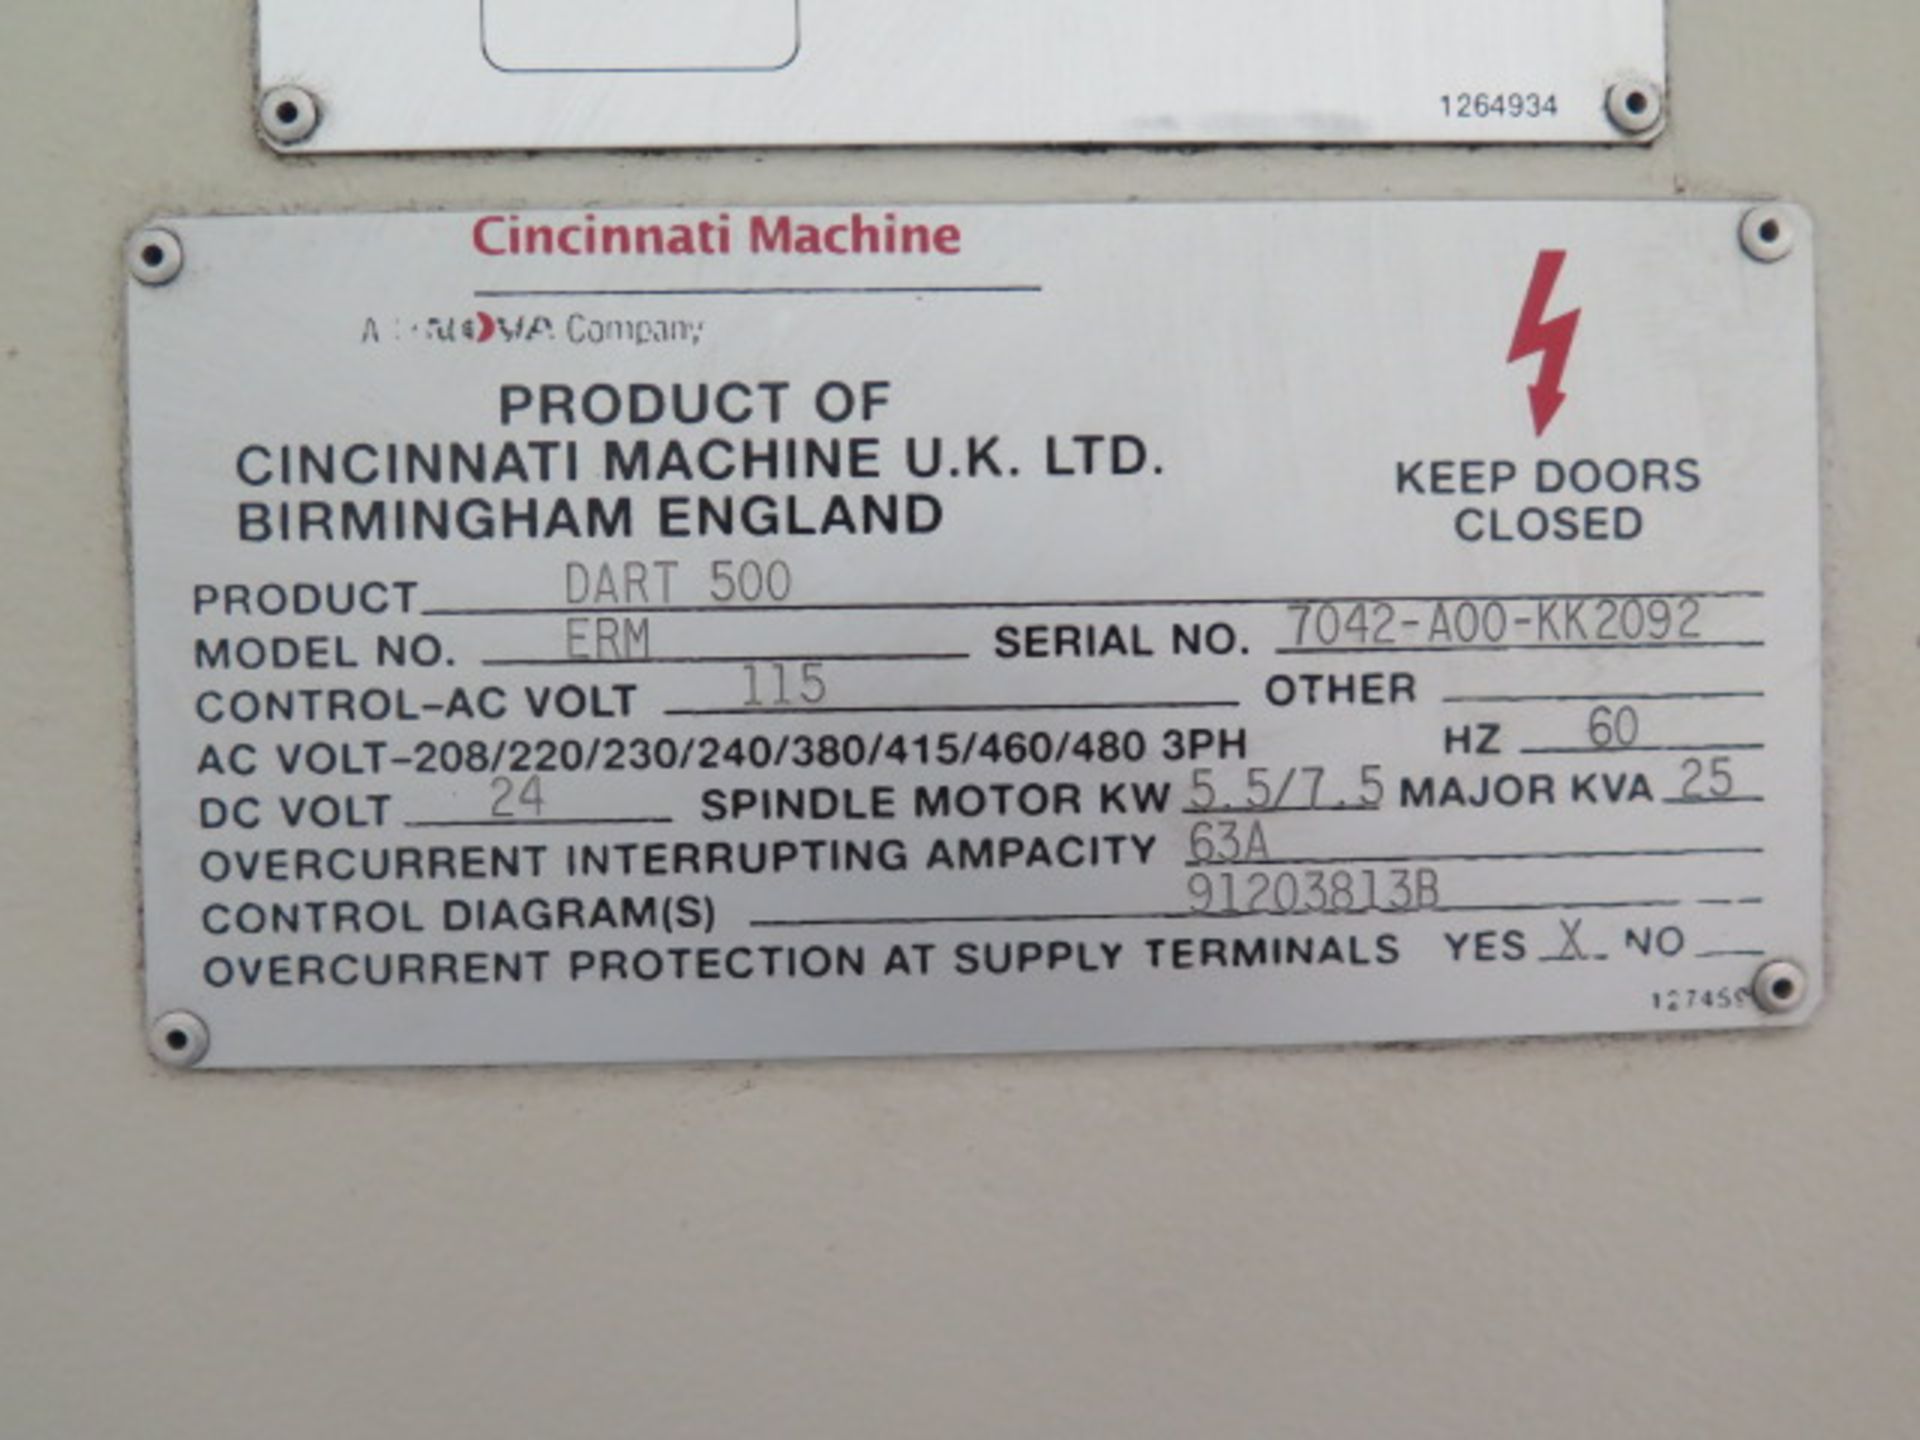 Cincinnati VMC-500 “Dart-500” CNC Vertical Machining Center s/n 7042-A00-KK2092 w/ Cincinnati - Image 12 of 13